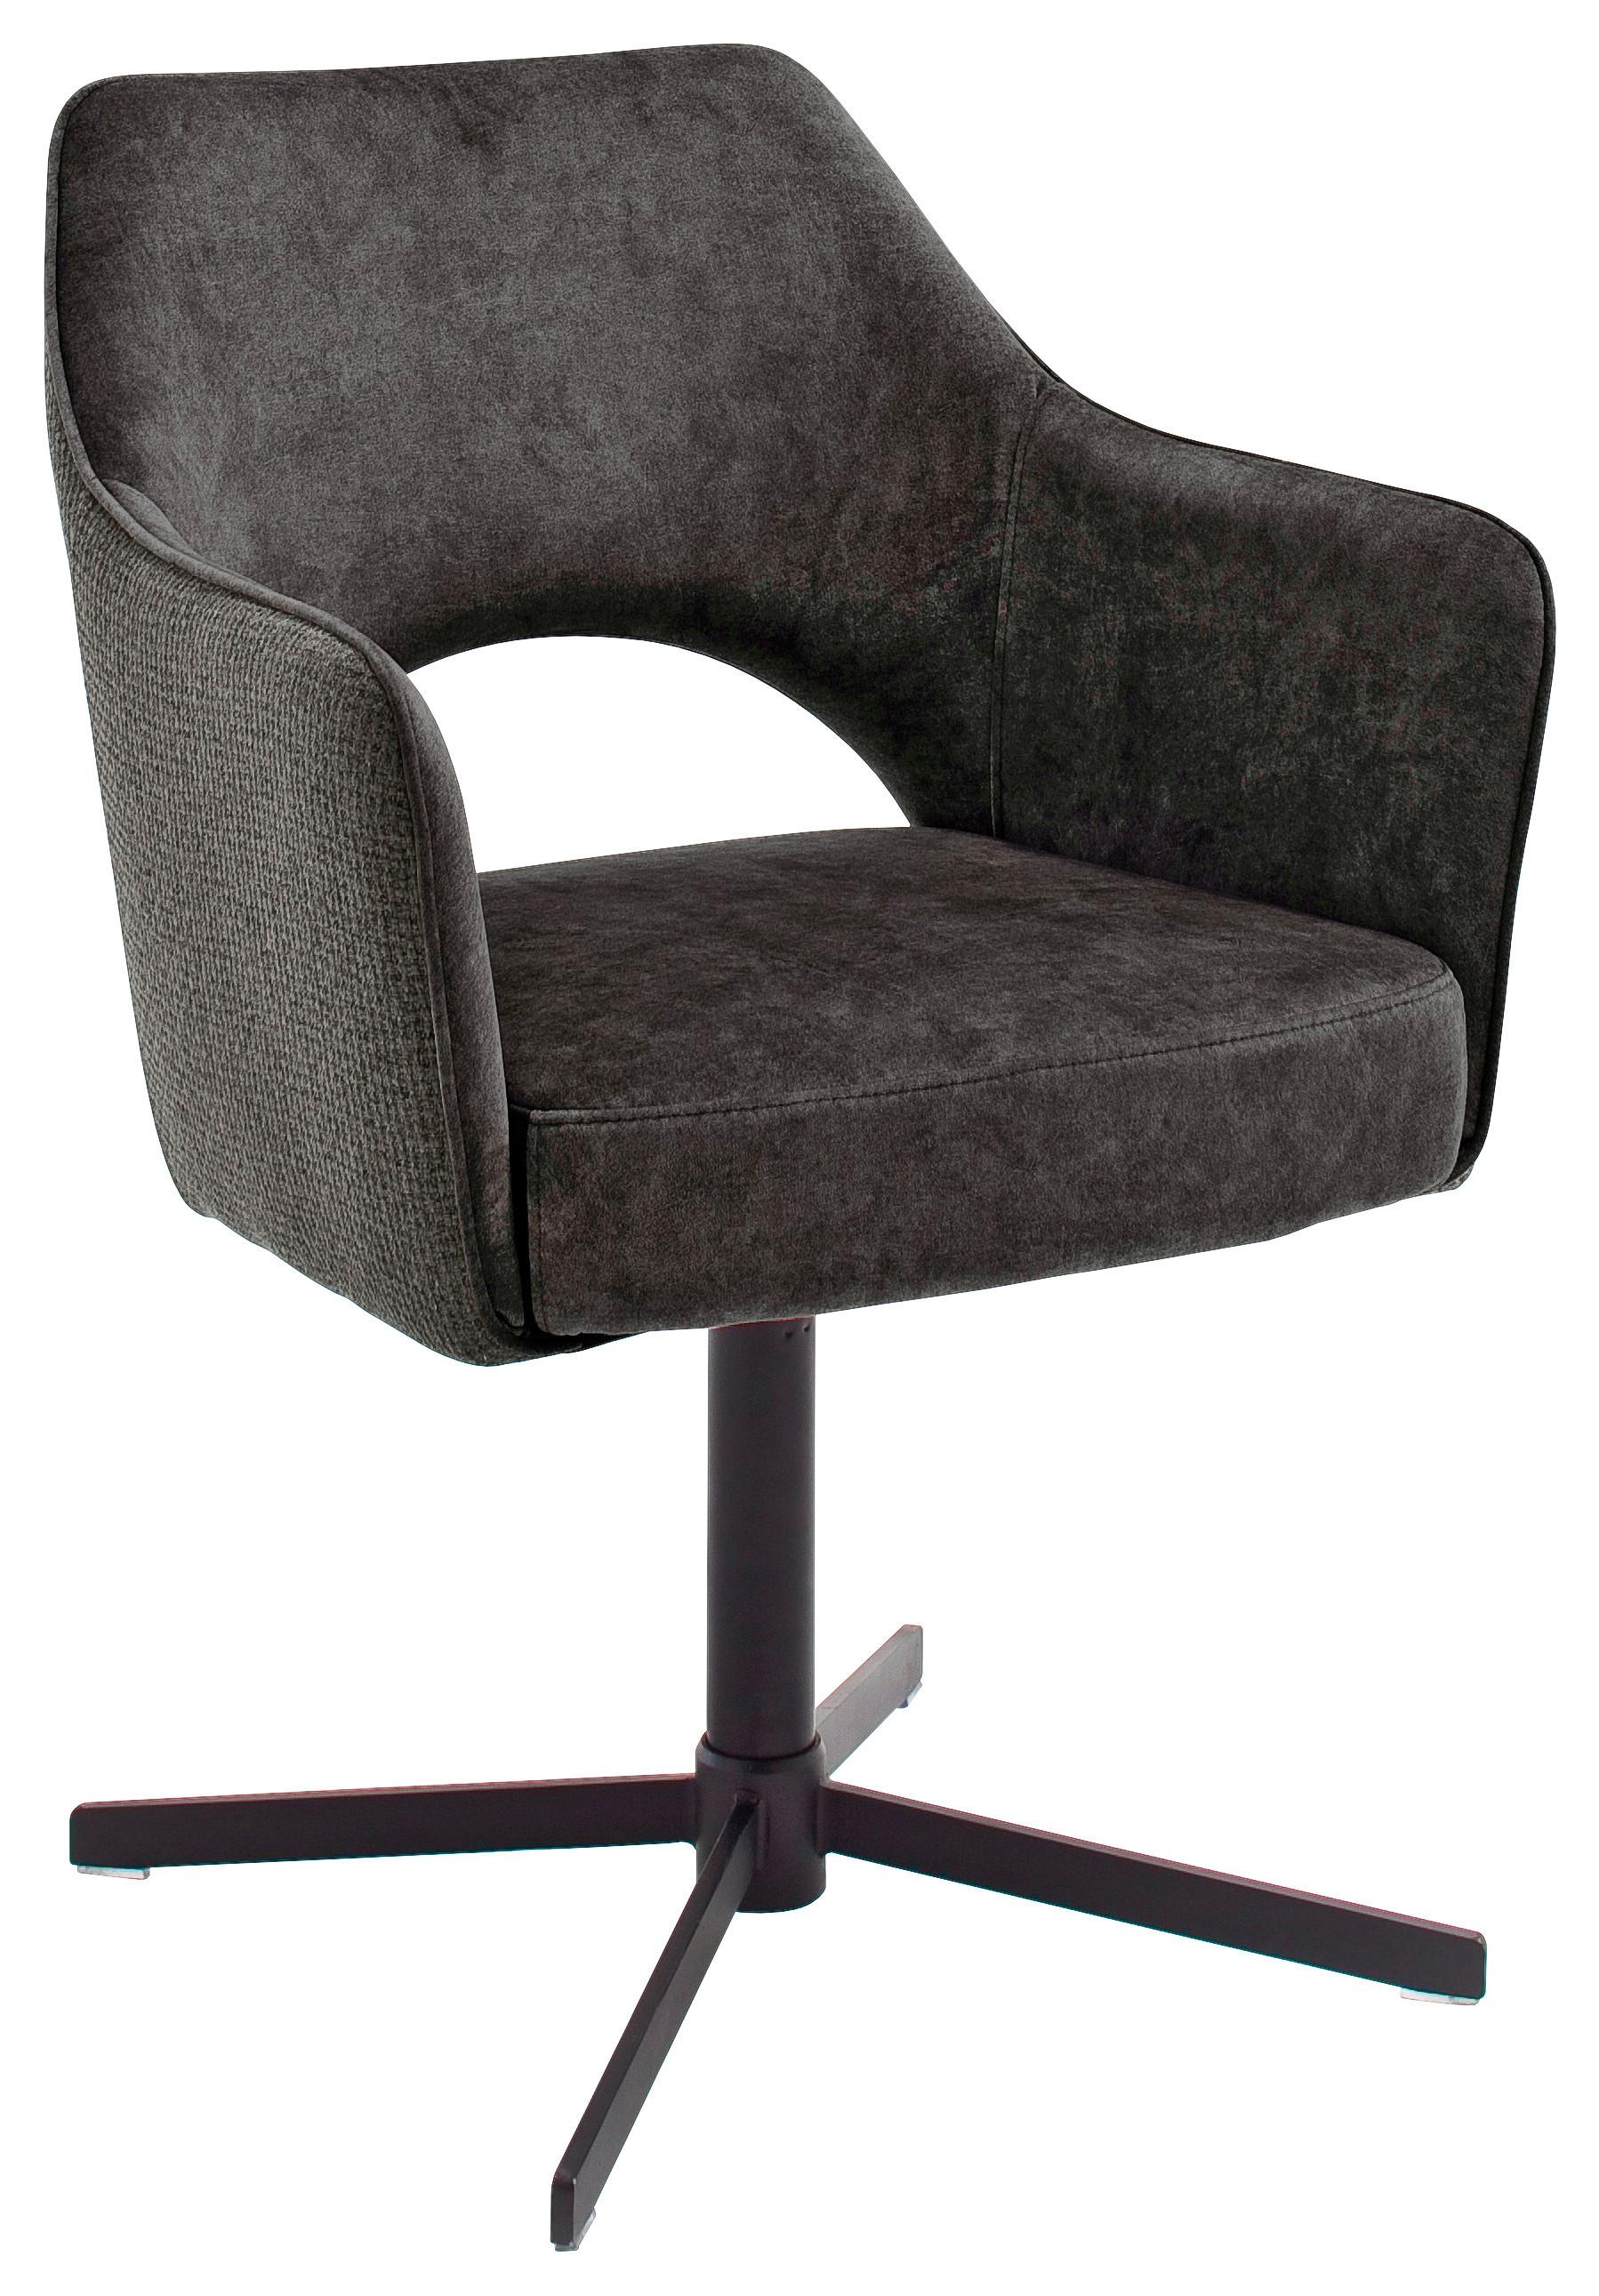 Židle S Područkami Valletta - černá/antracitová, Konvenční, kov/textil (61/85/60cm) - Premium Living